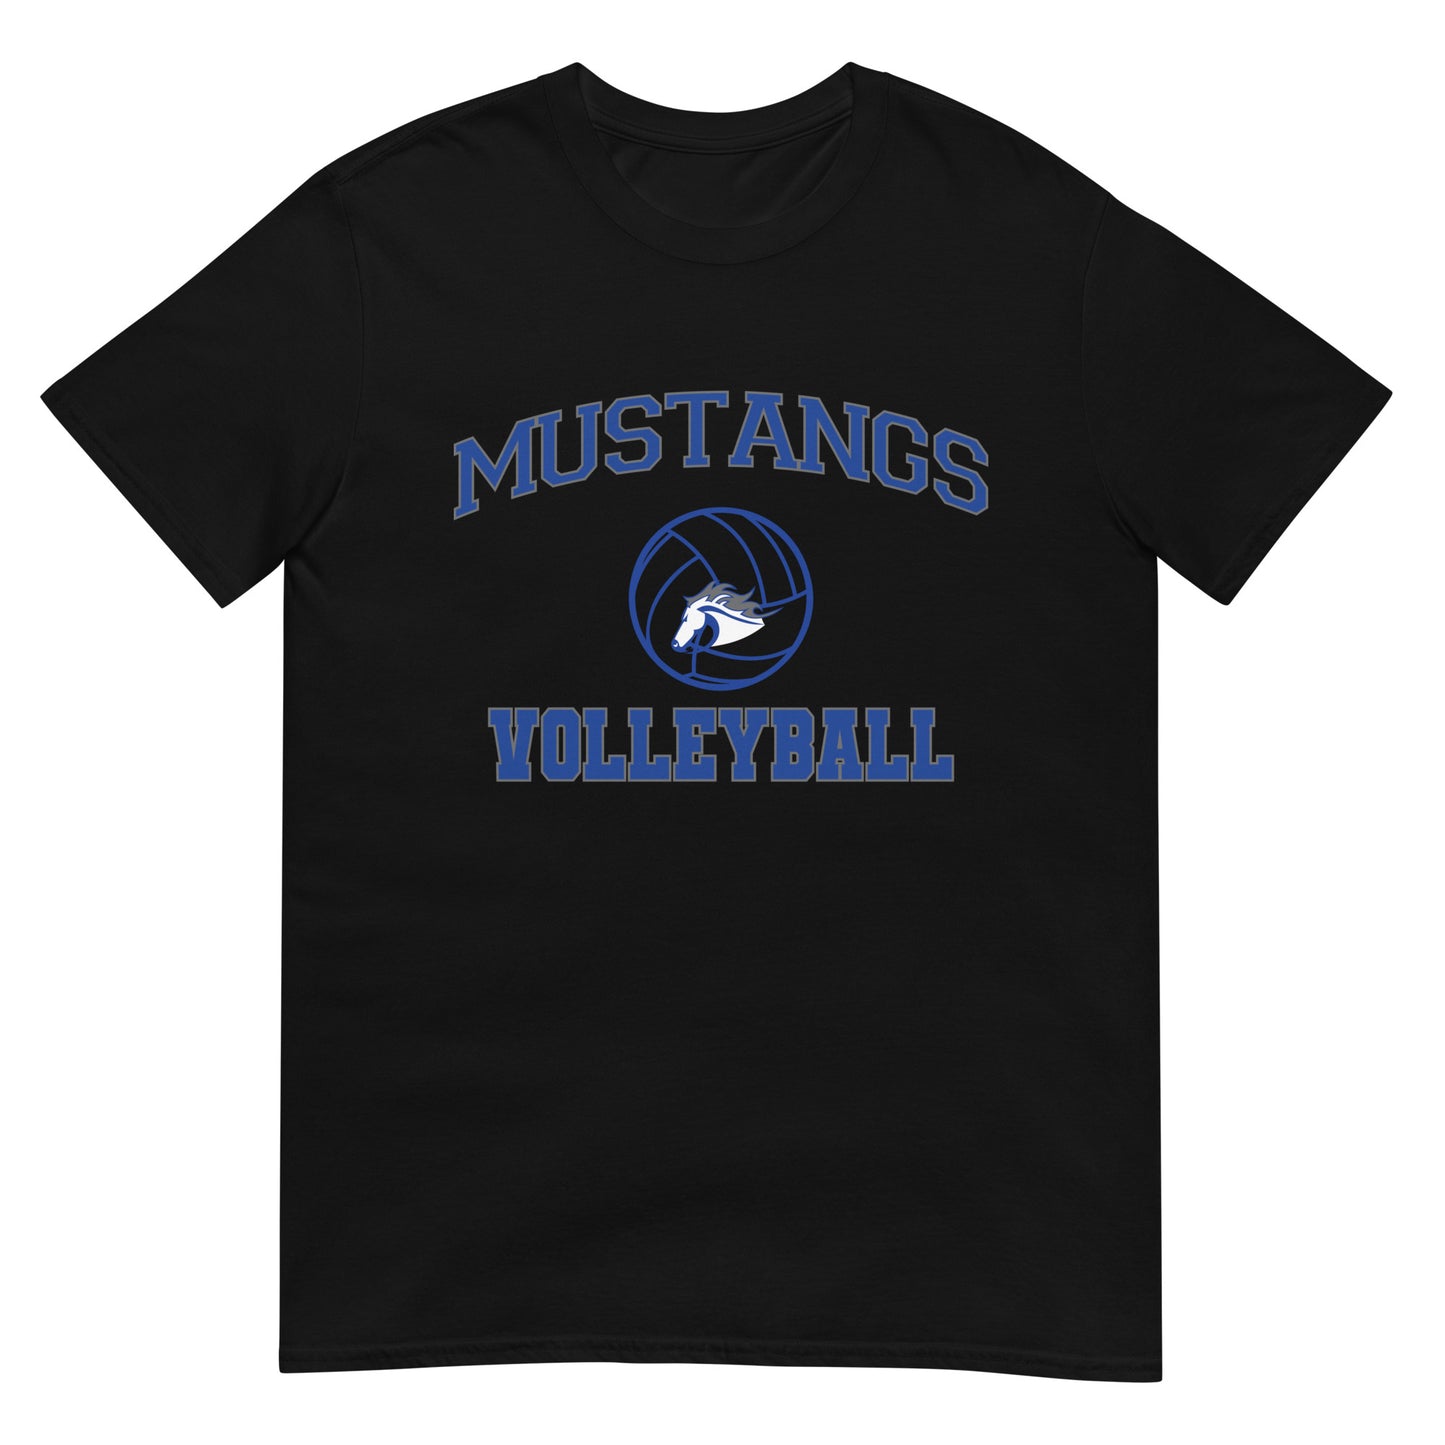 Mustang Volleyball Short-Sleeve Unisex T-Shirt